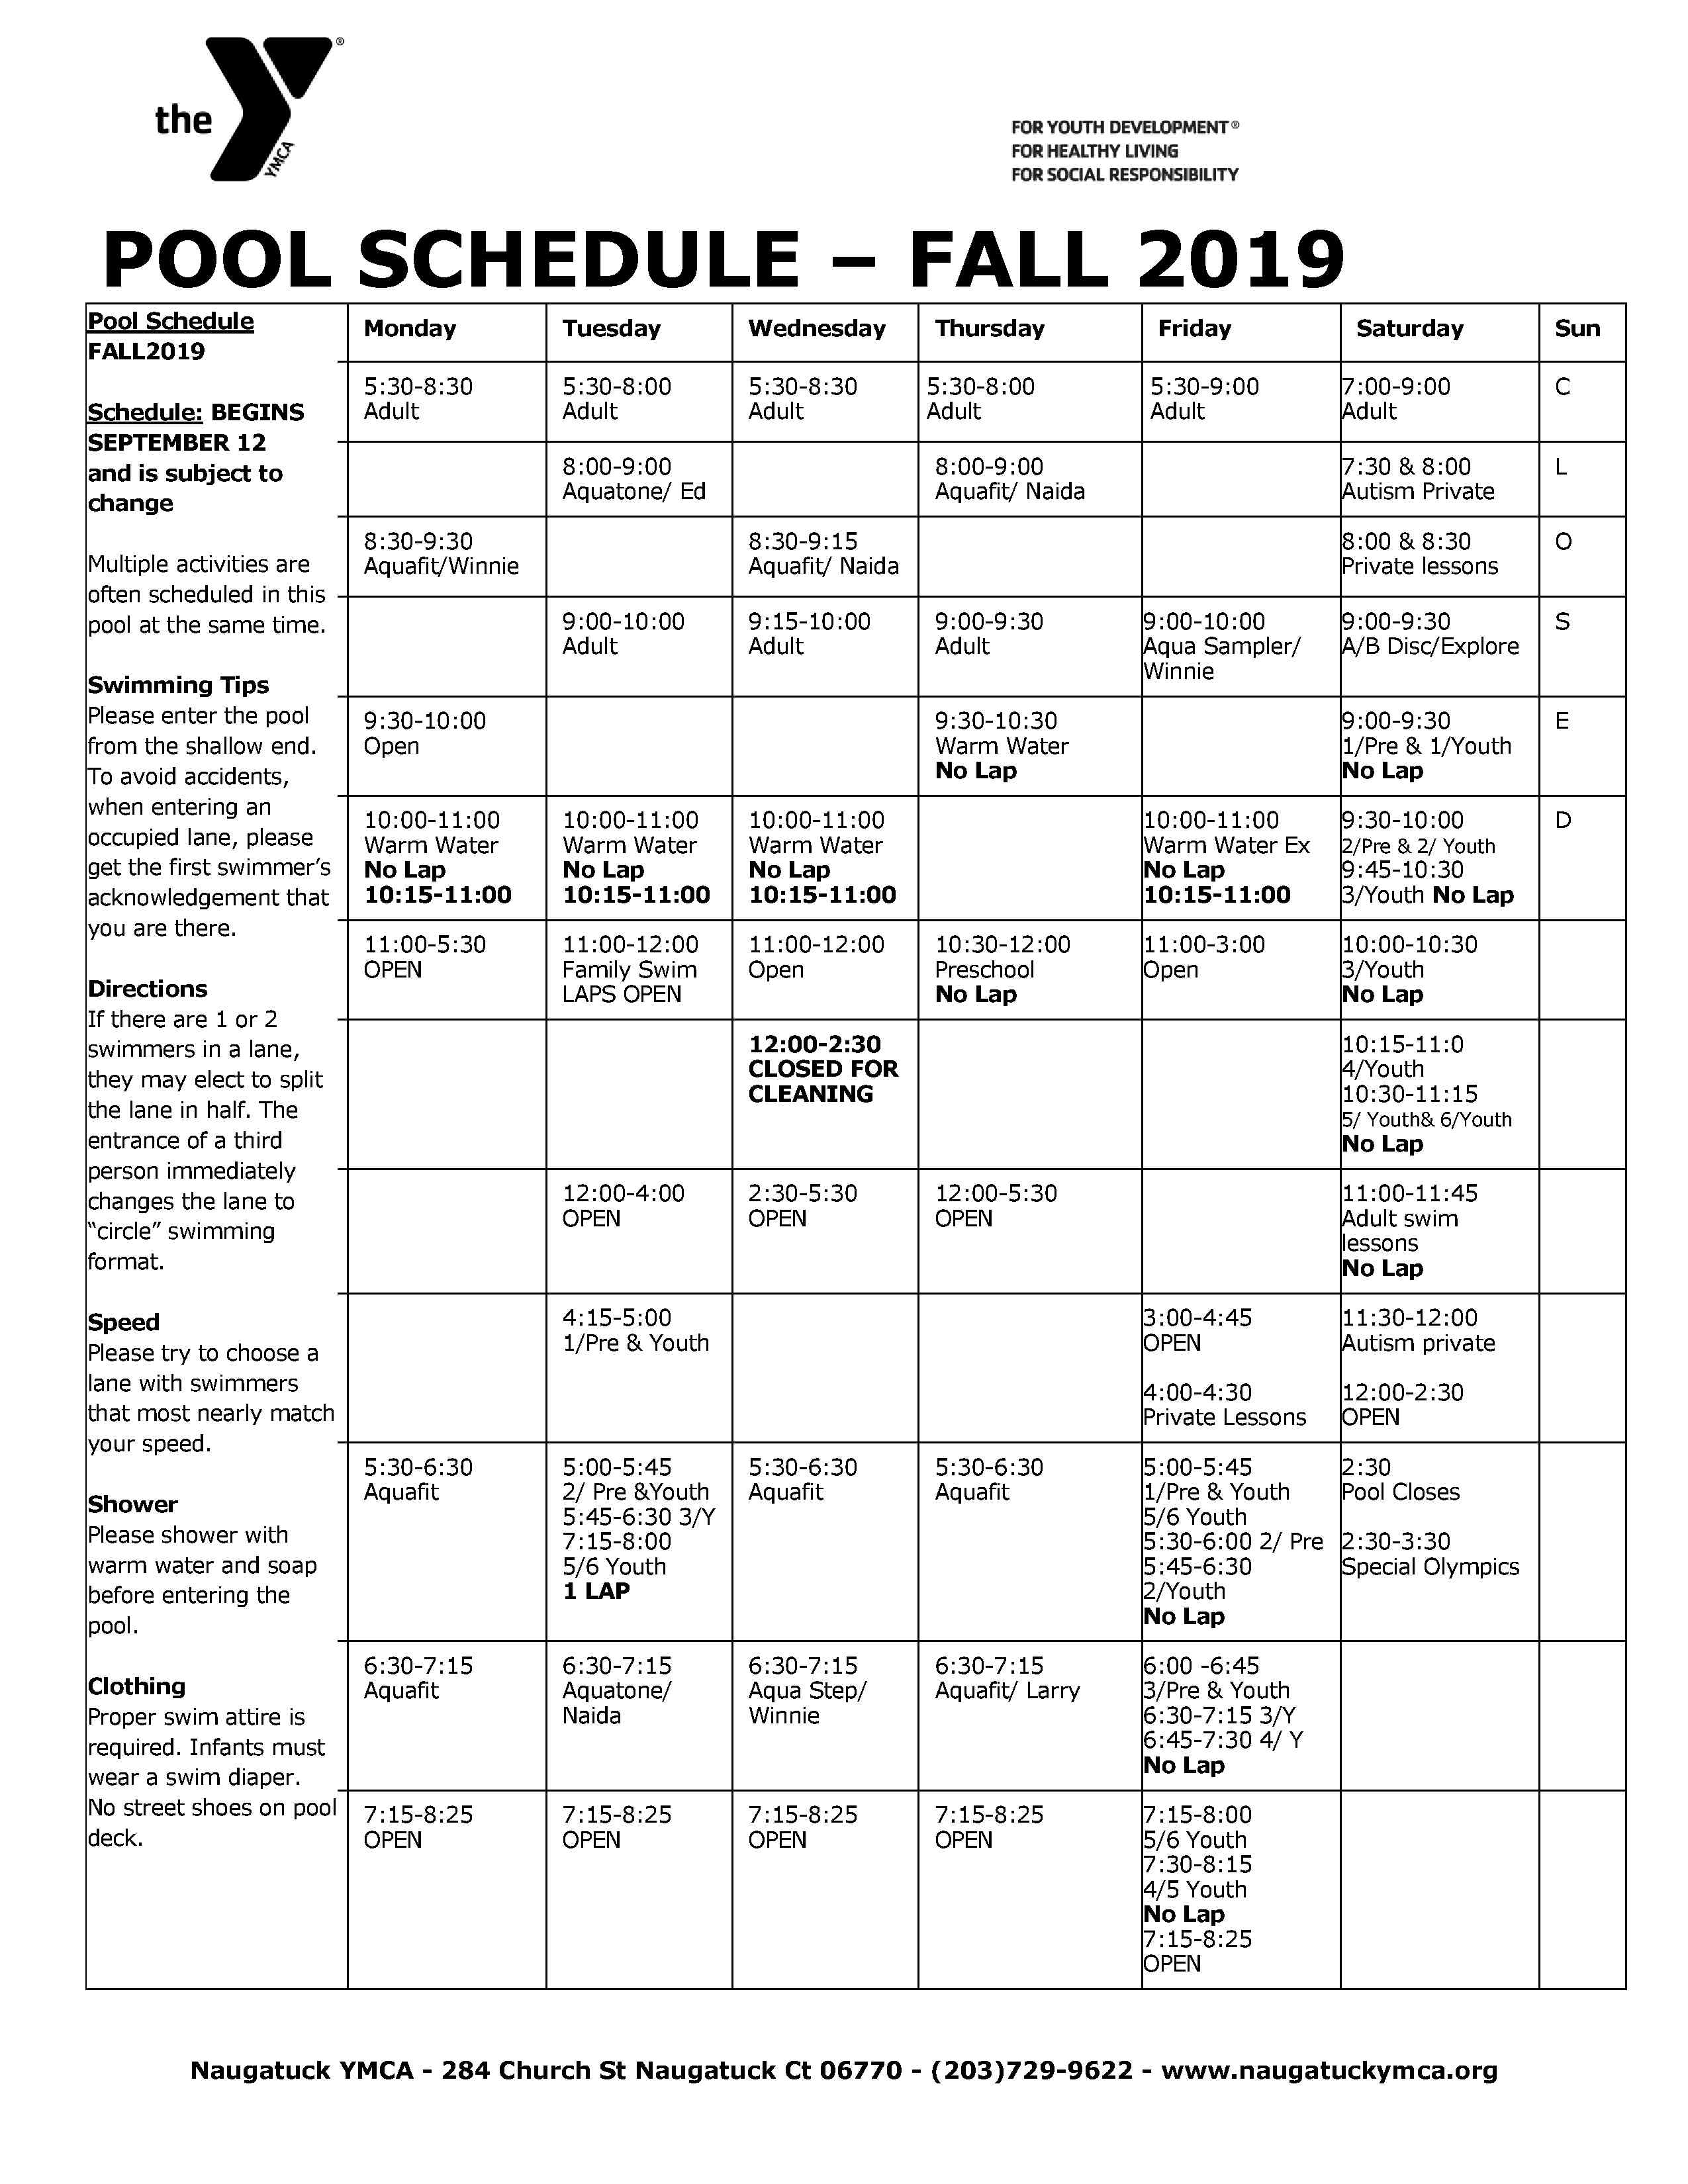 Pool Schedule – FALL 2019 – NAUGATUCK YMCA